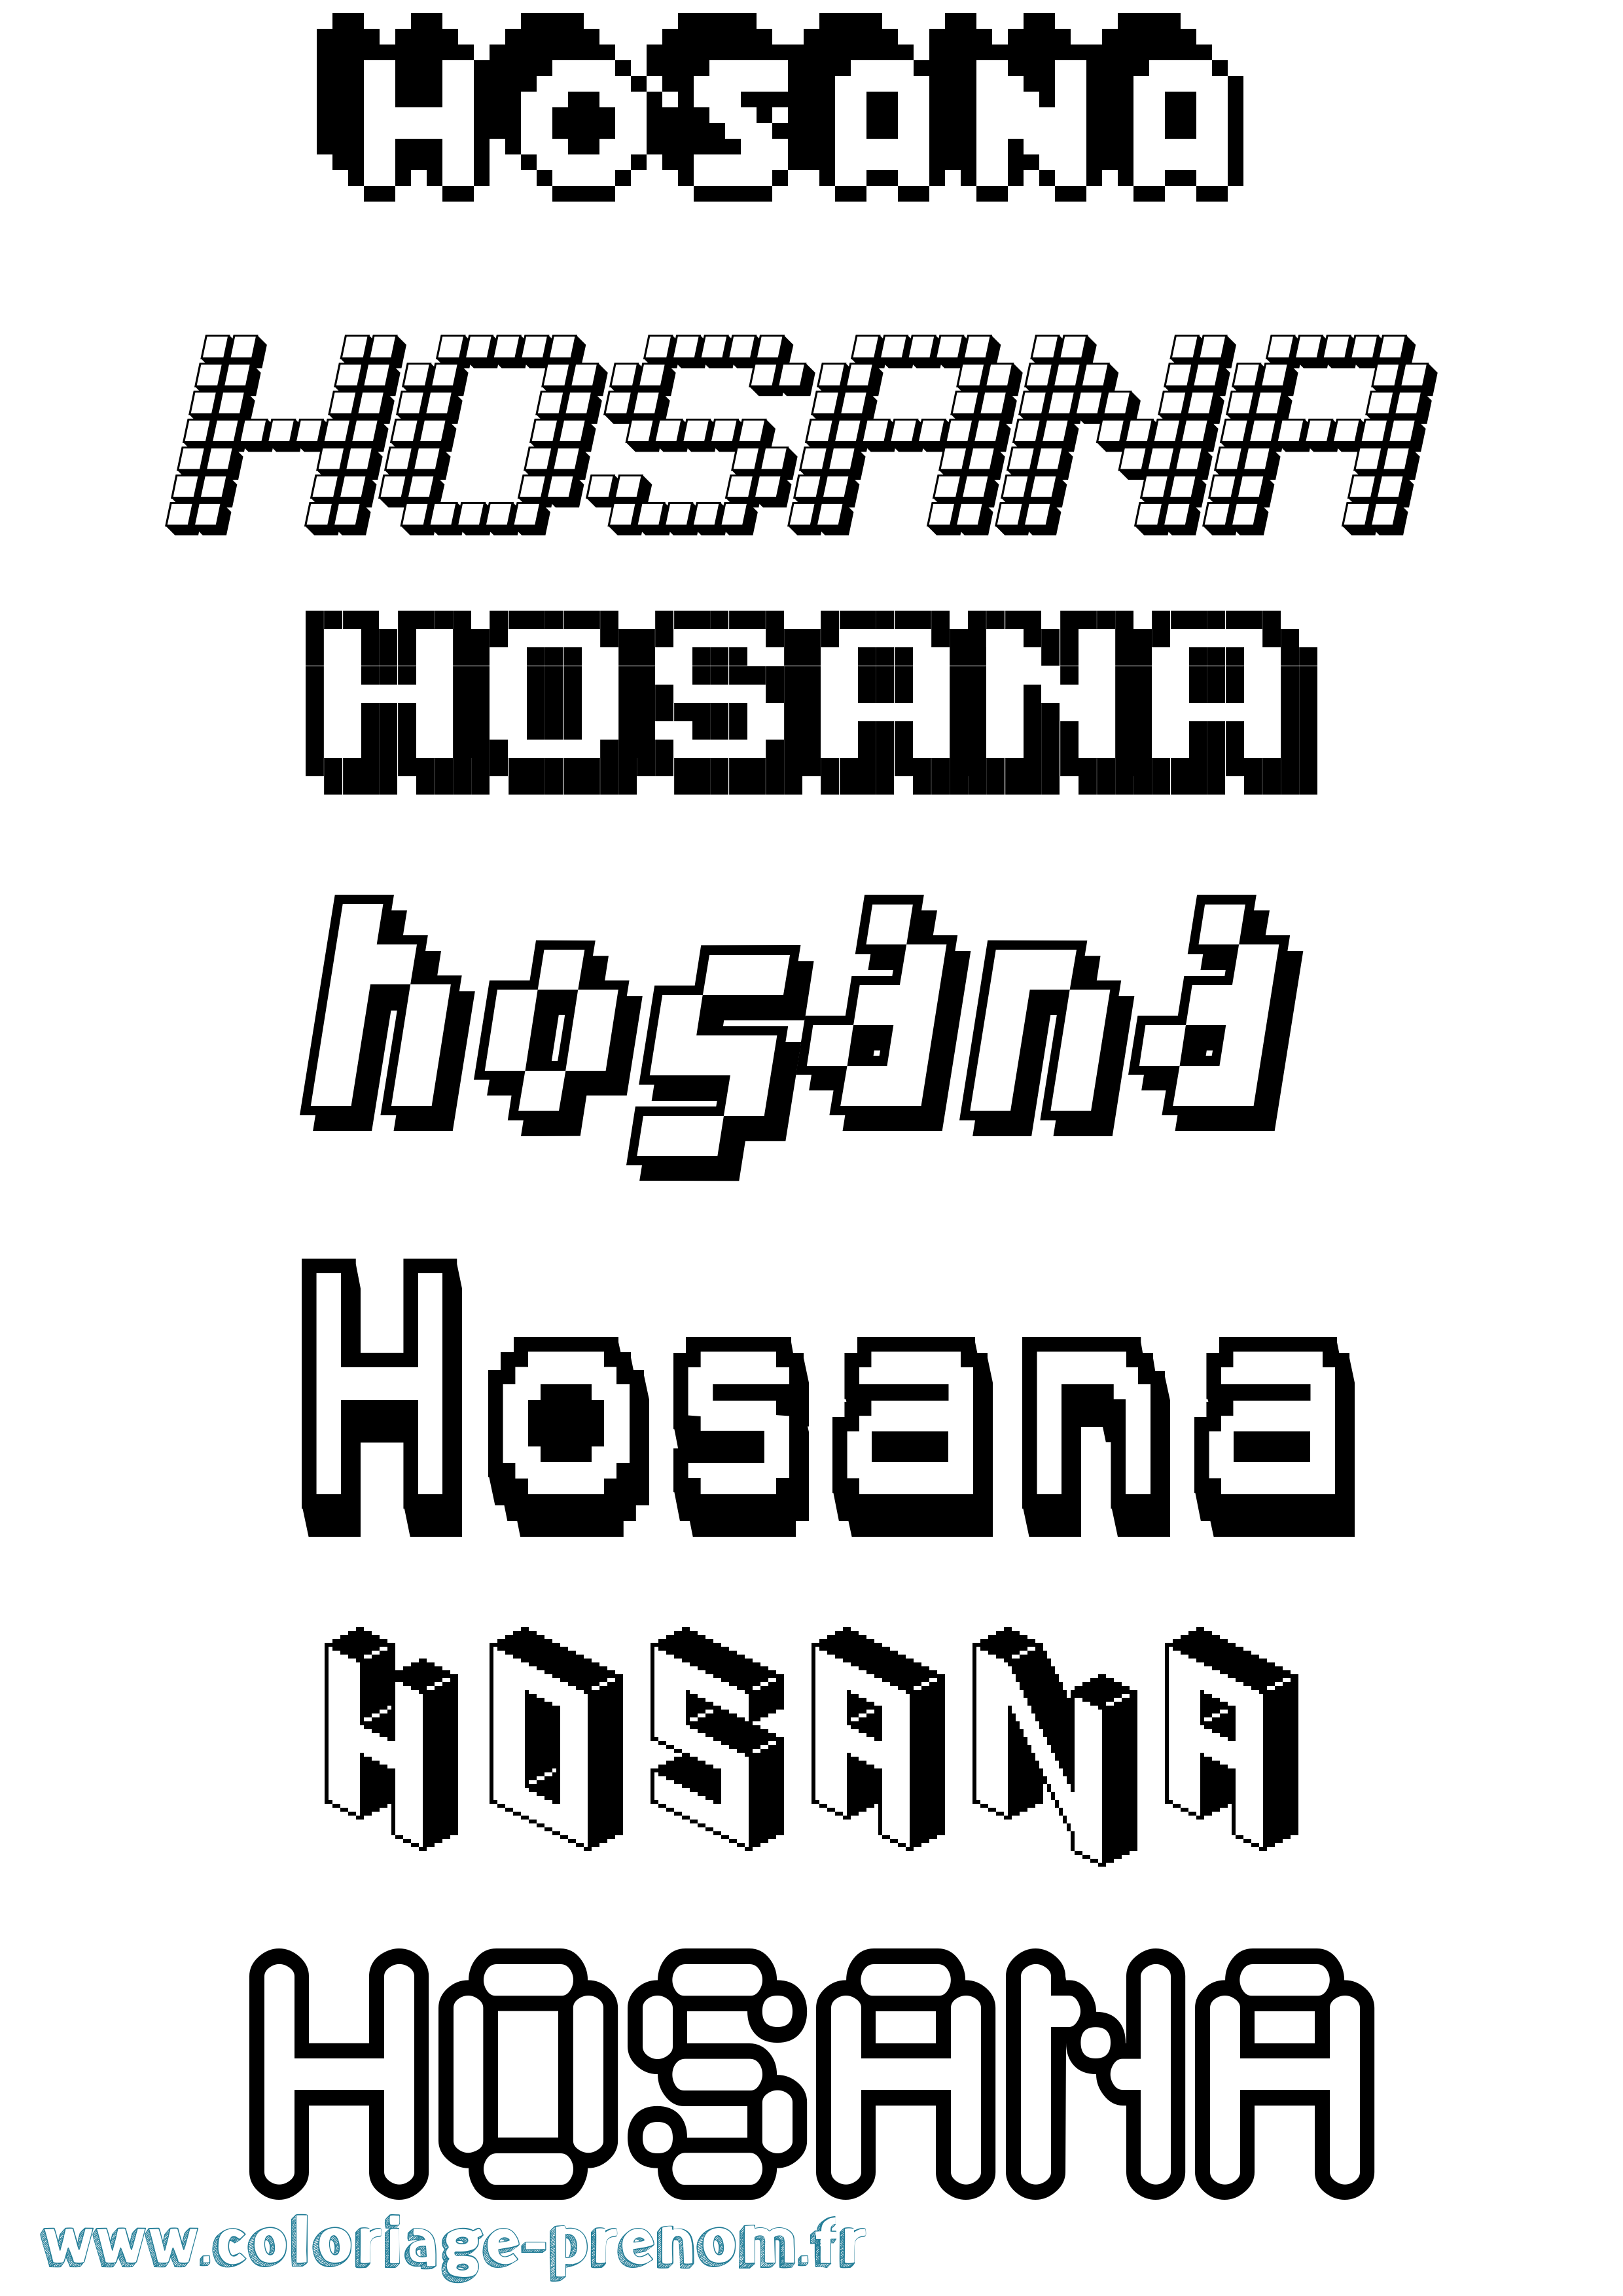 Coloriage prénom Hosana Pixel